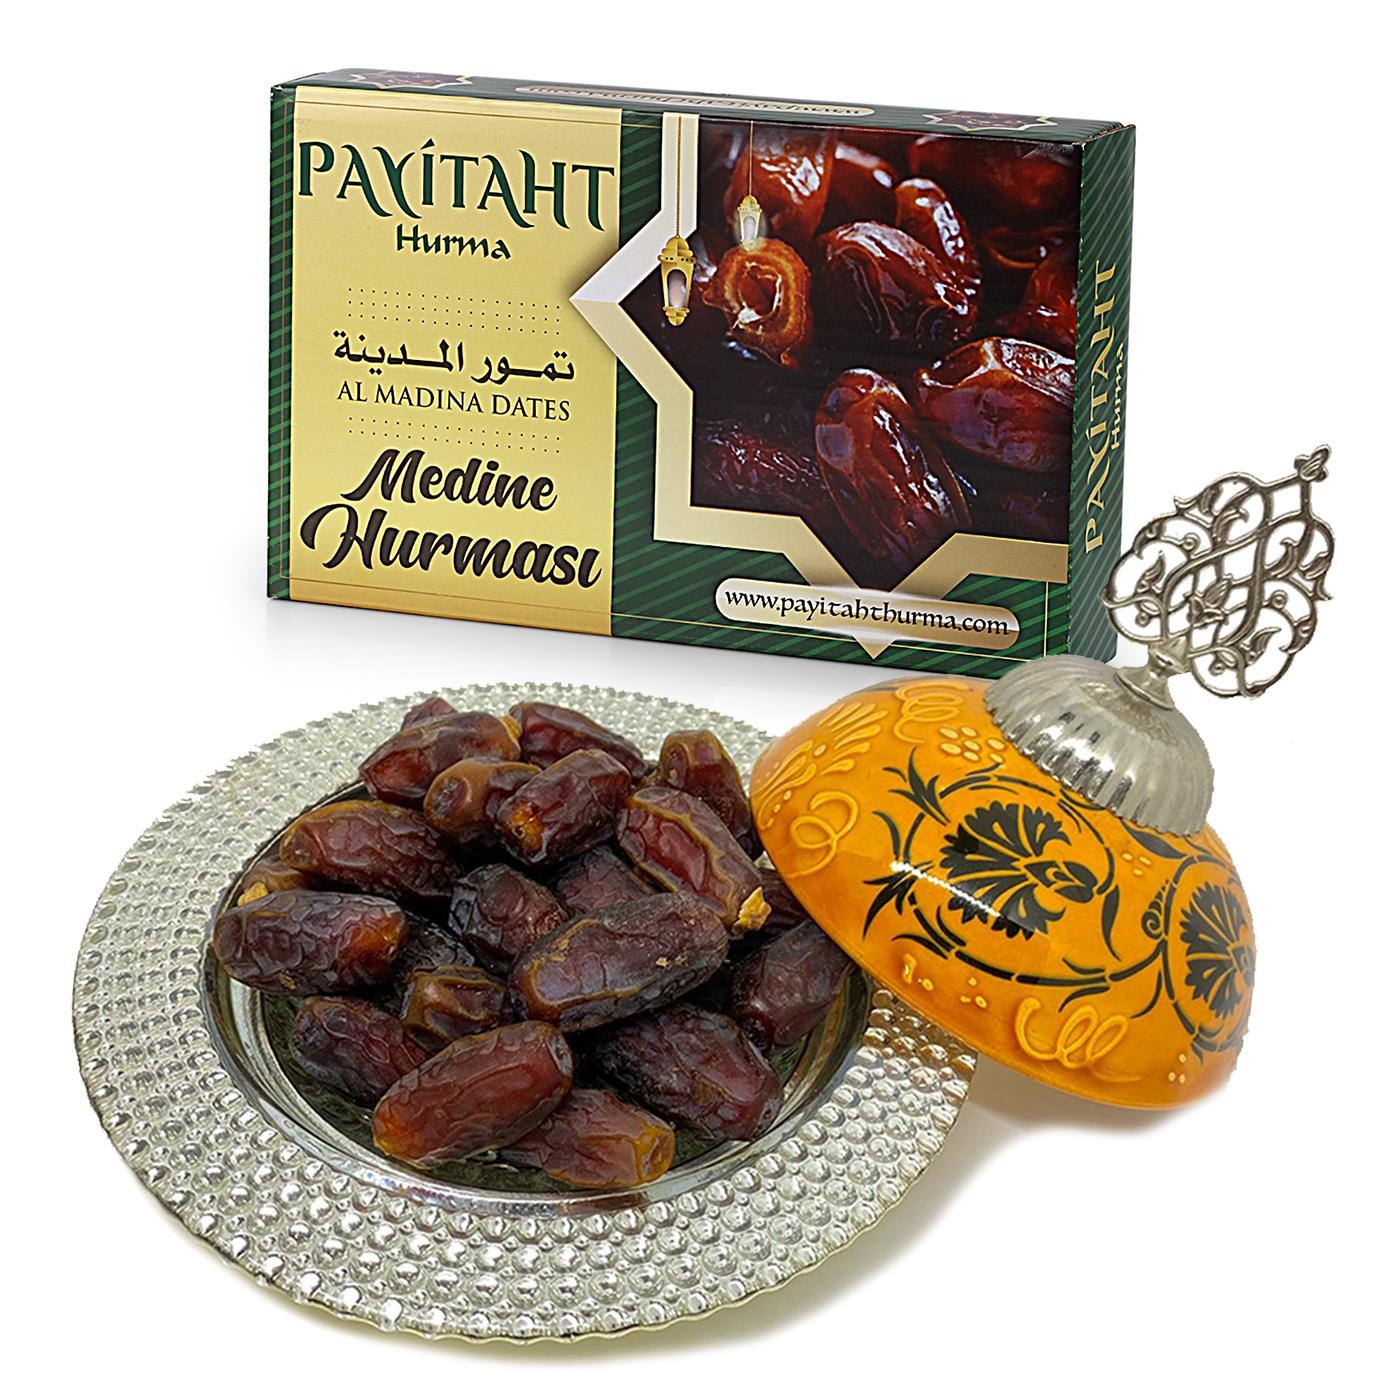 Payitaht Hurma Medina Mebrum Meşruk Dates New Harvest Taster 250 Gram Package